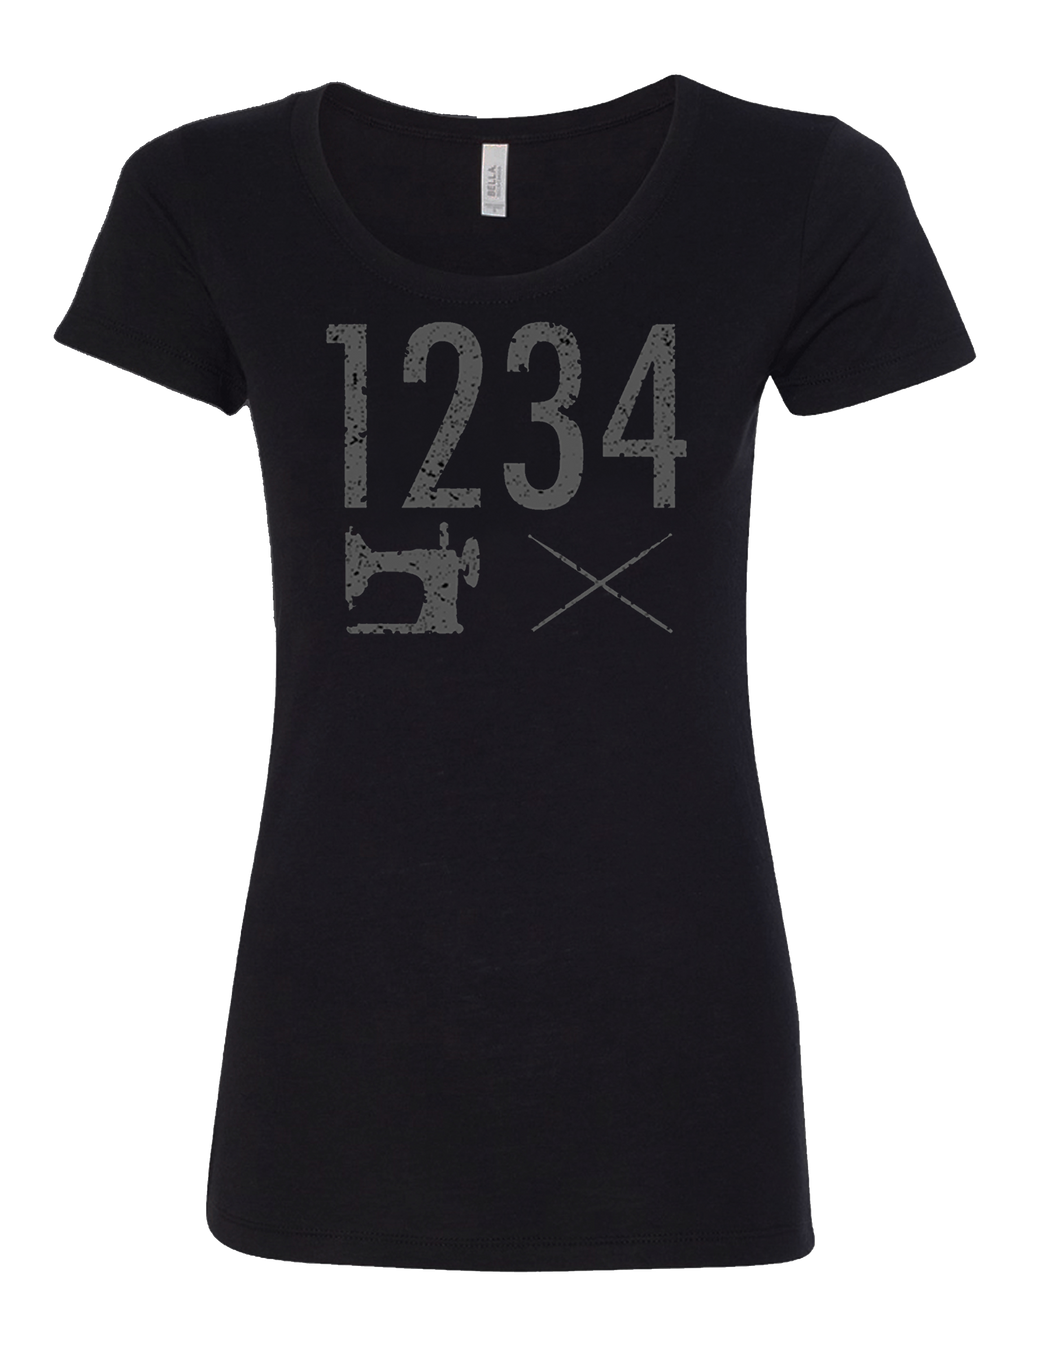 1234 Womens Shirt - 1234Clothing